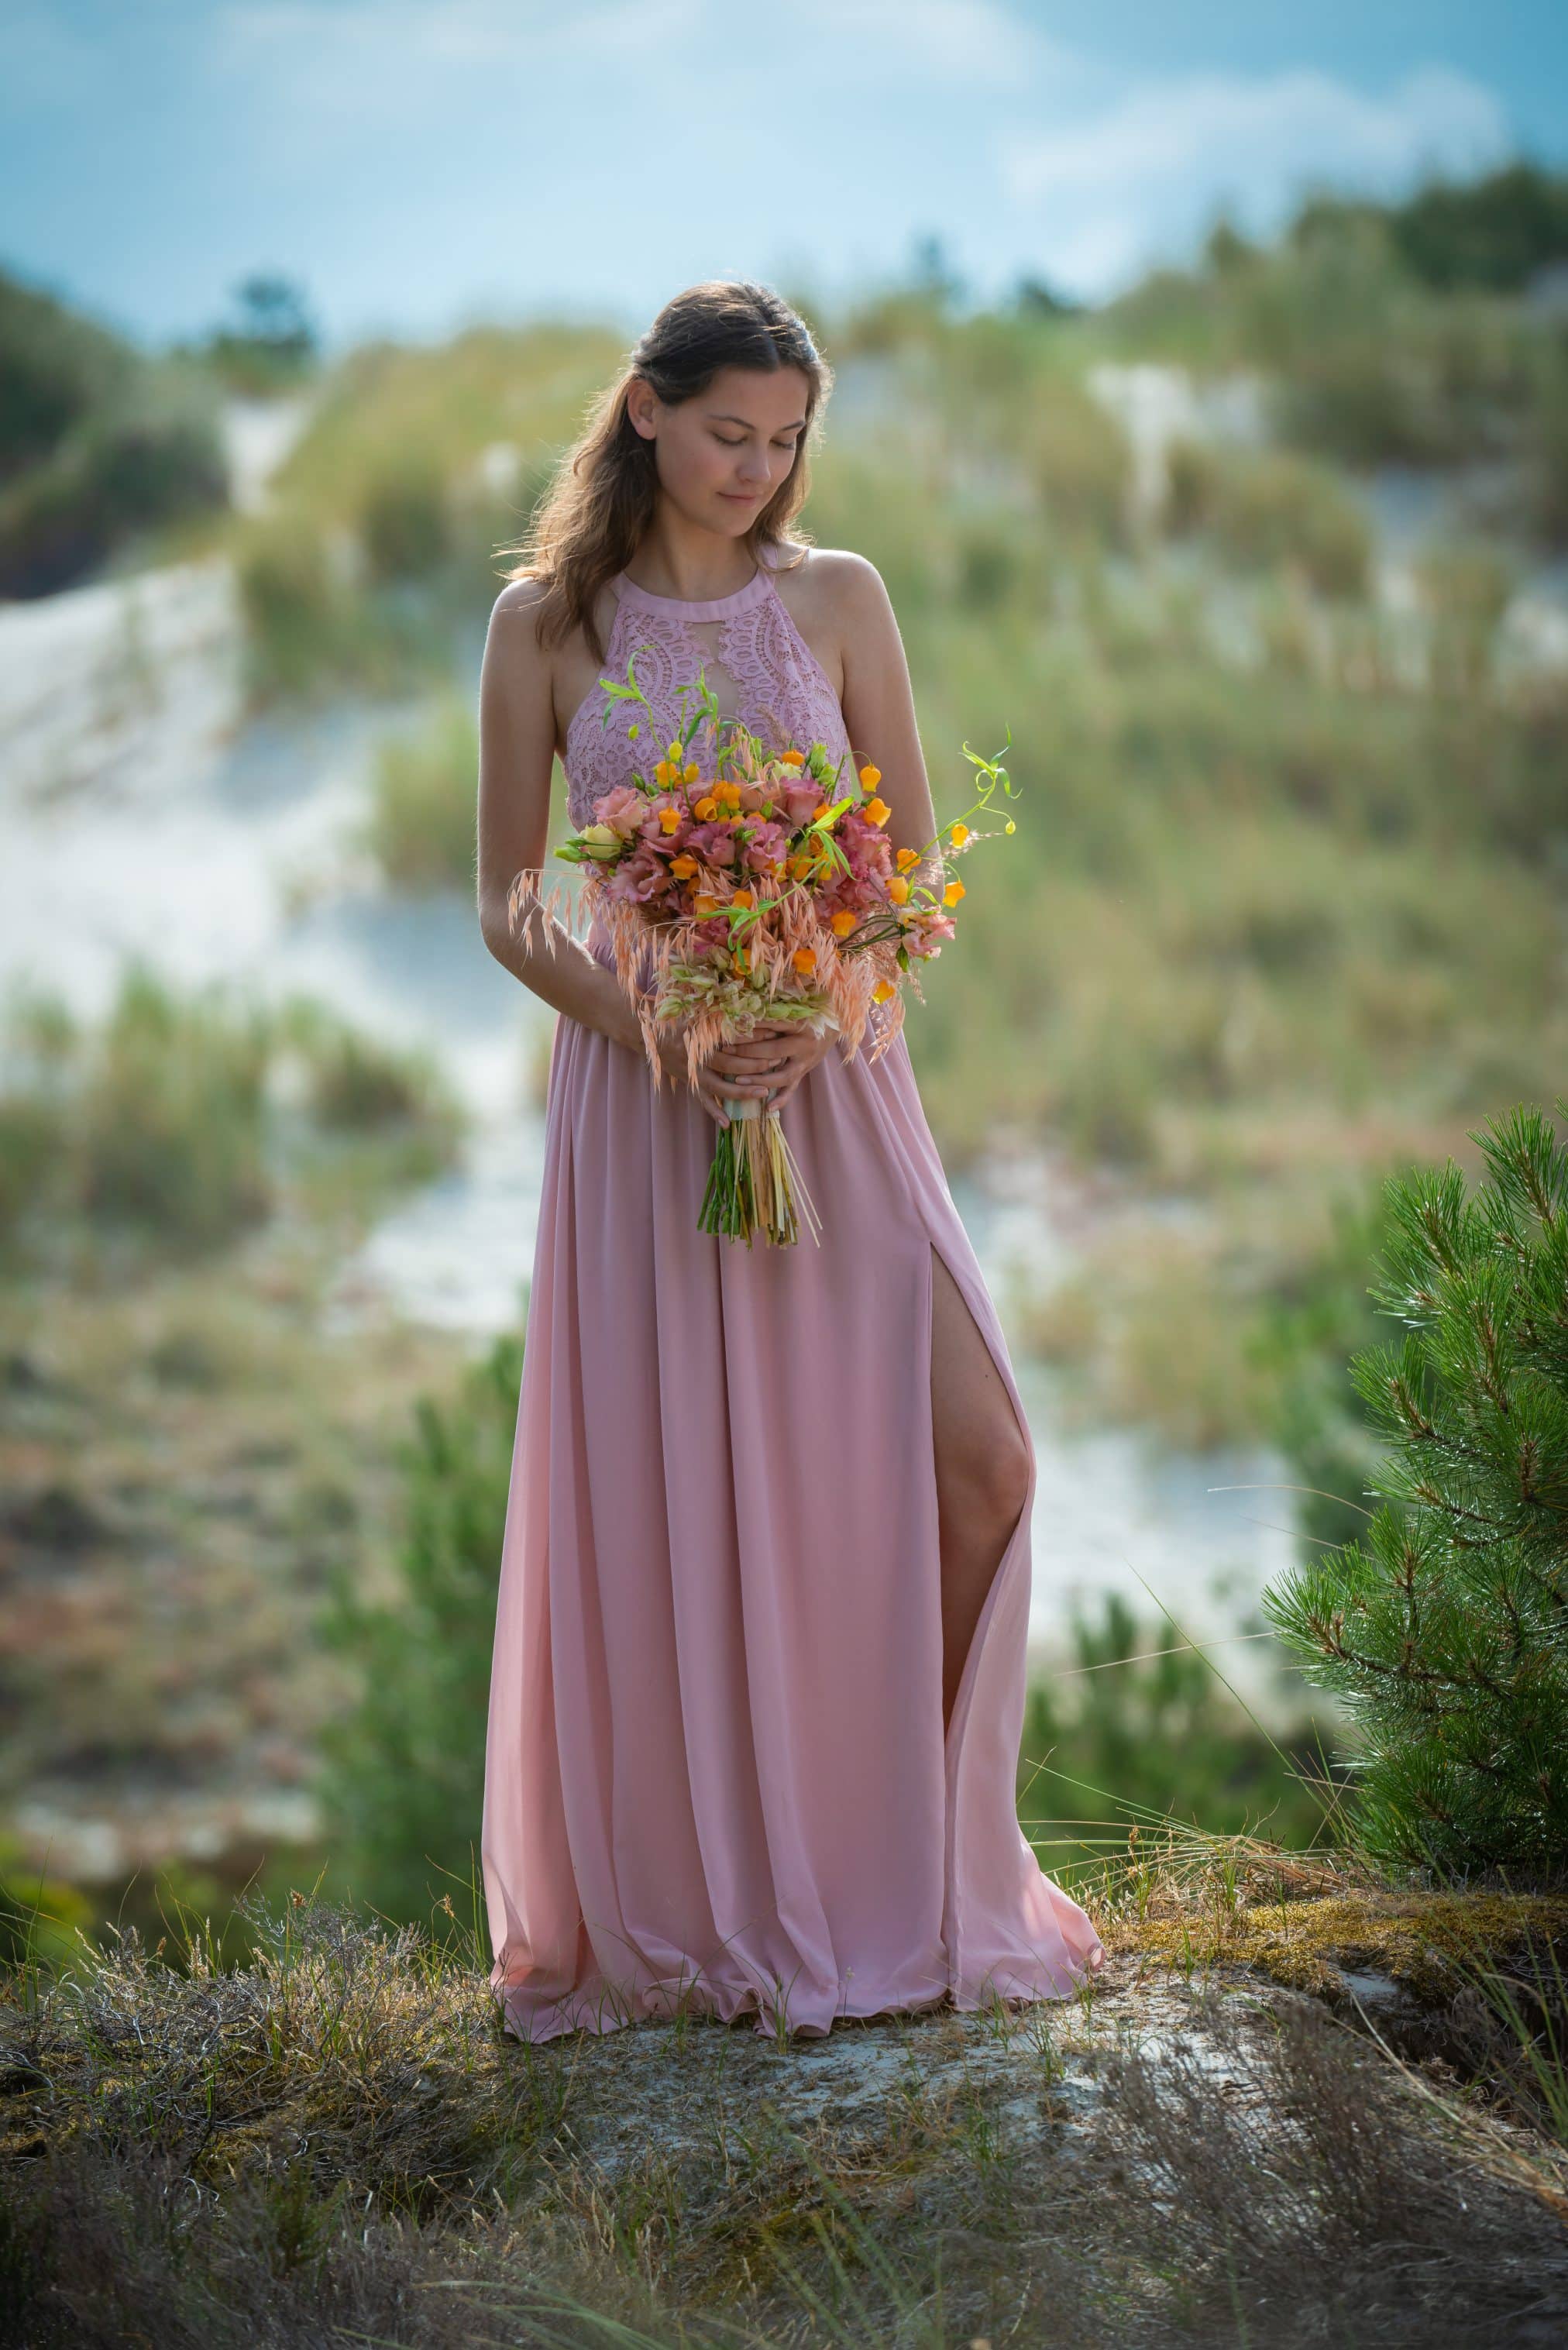 Lisianthus-Eustoma-Wedding-Flower-Arrangement-Bride-Bouquet-Bridal Bouquet-White-Red-Pink-Forest-Dunes-Salmon-Champagne-Orange